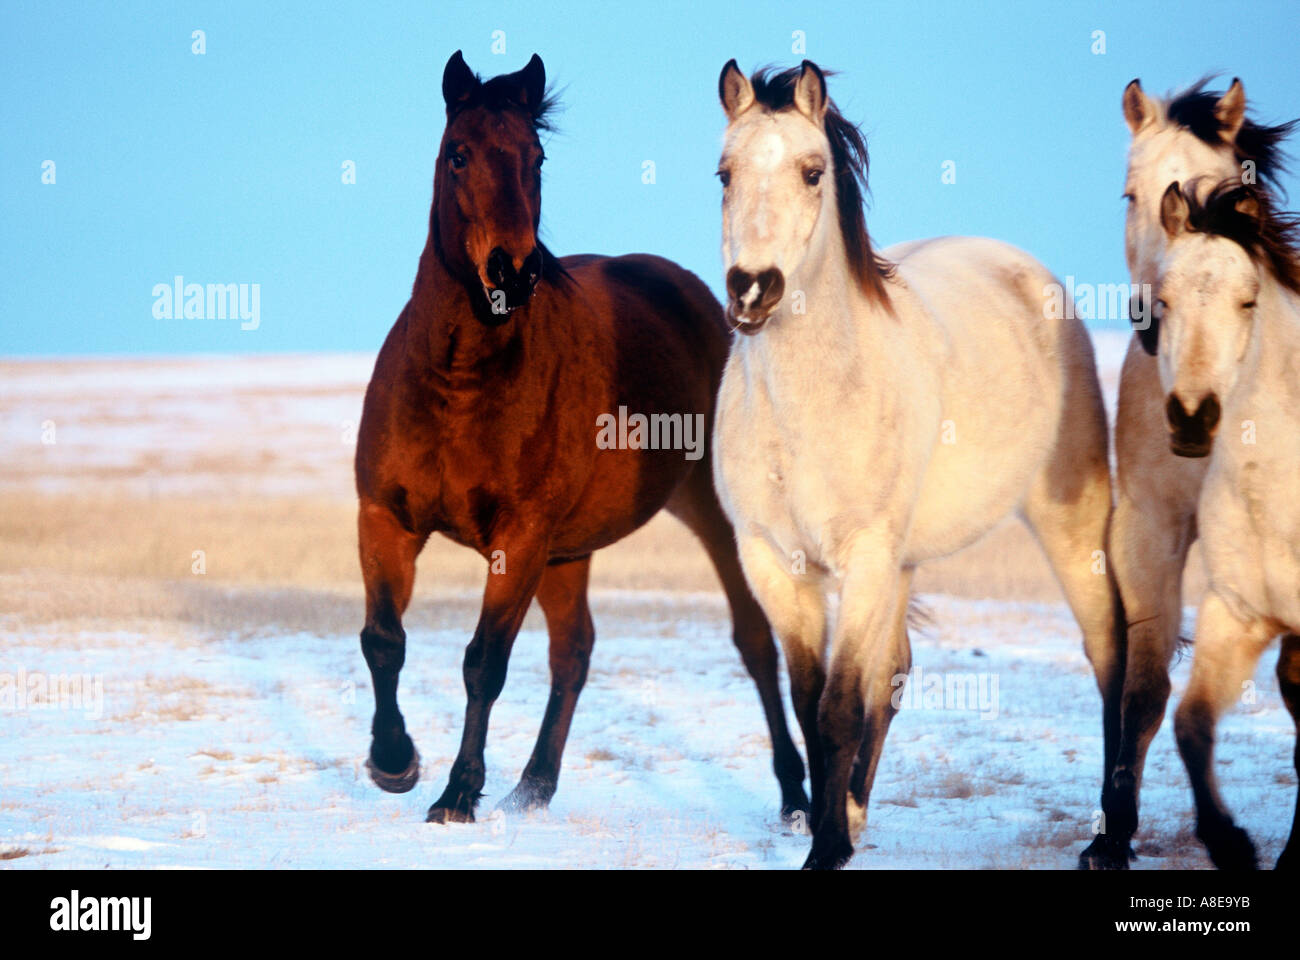 Four horses running the Great Plains of South Dakota Stock Photo